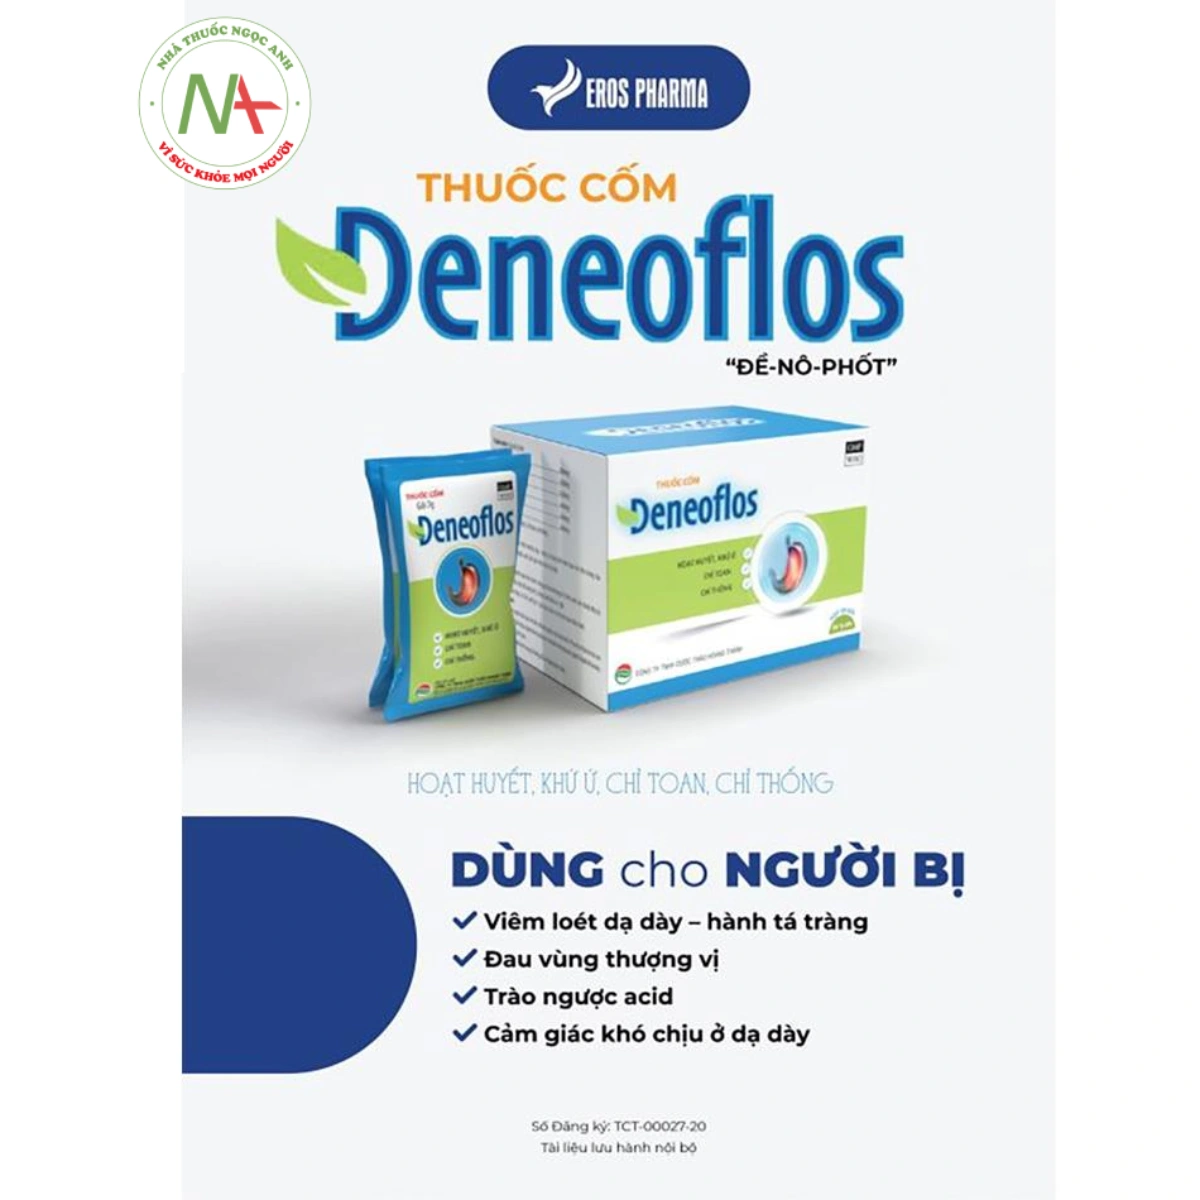 Thuốc cốm Deneoflos